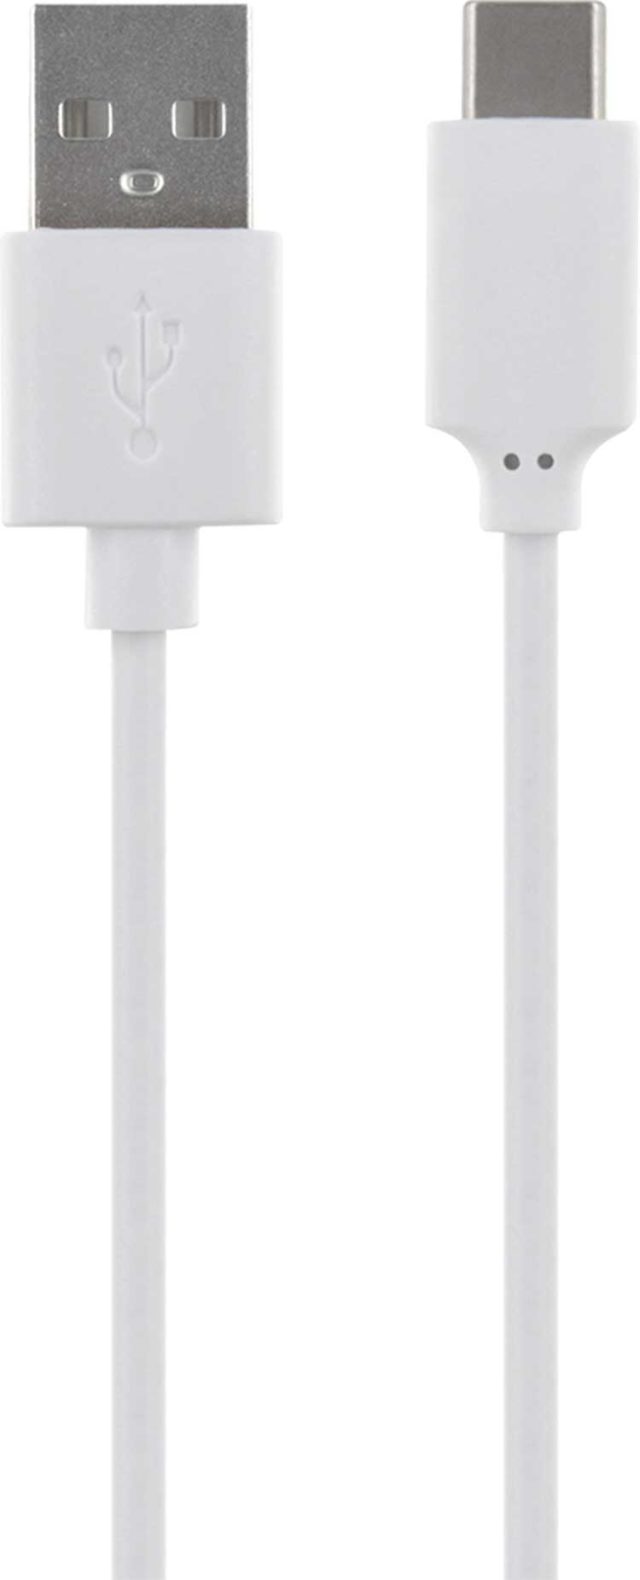 USB A/USB C synchronisation adapters (white) - Packshot